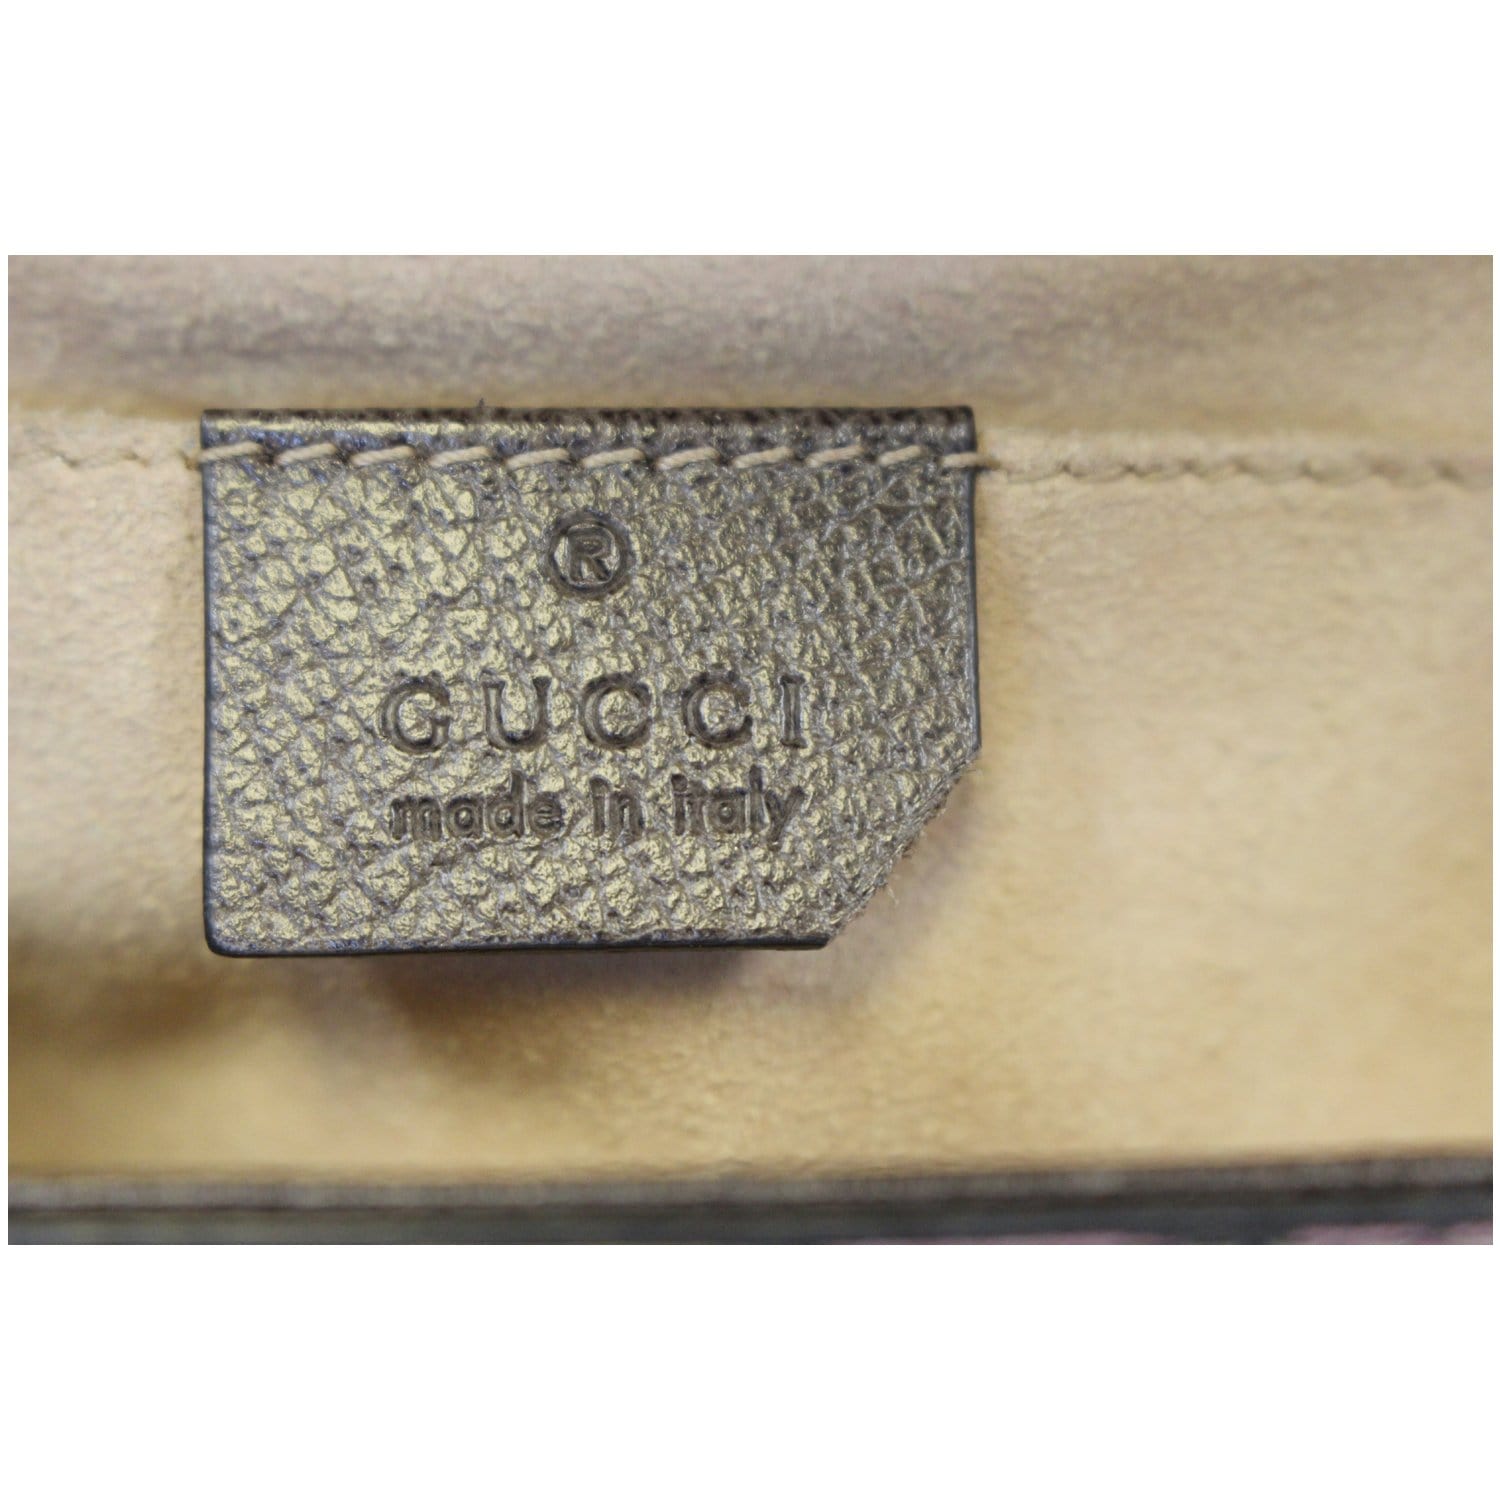 Gucci monogram padlock messenger bag 1895.00❌sold❌